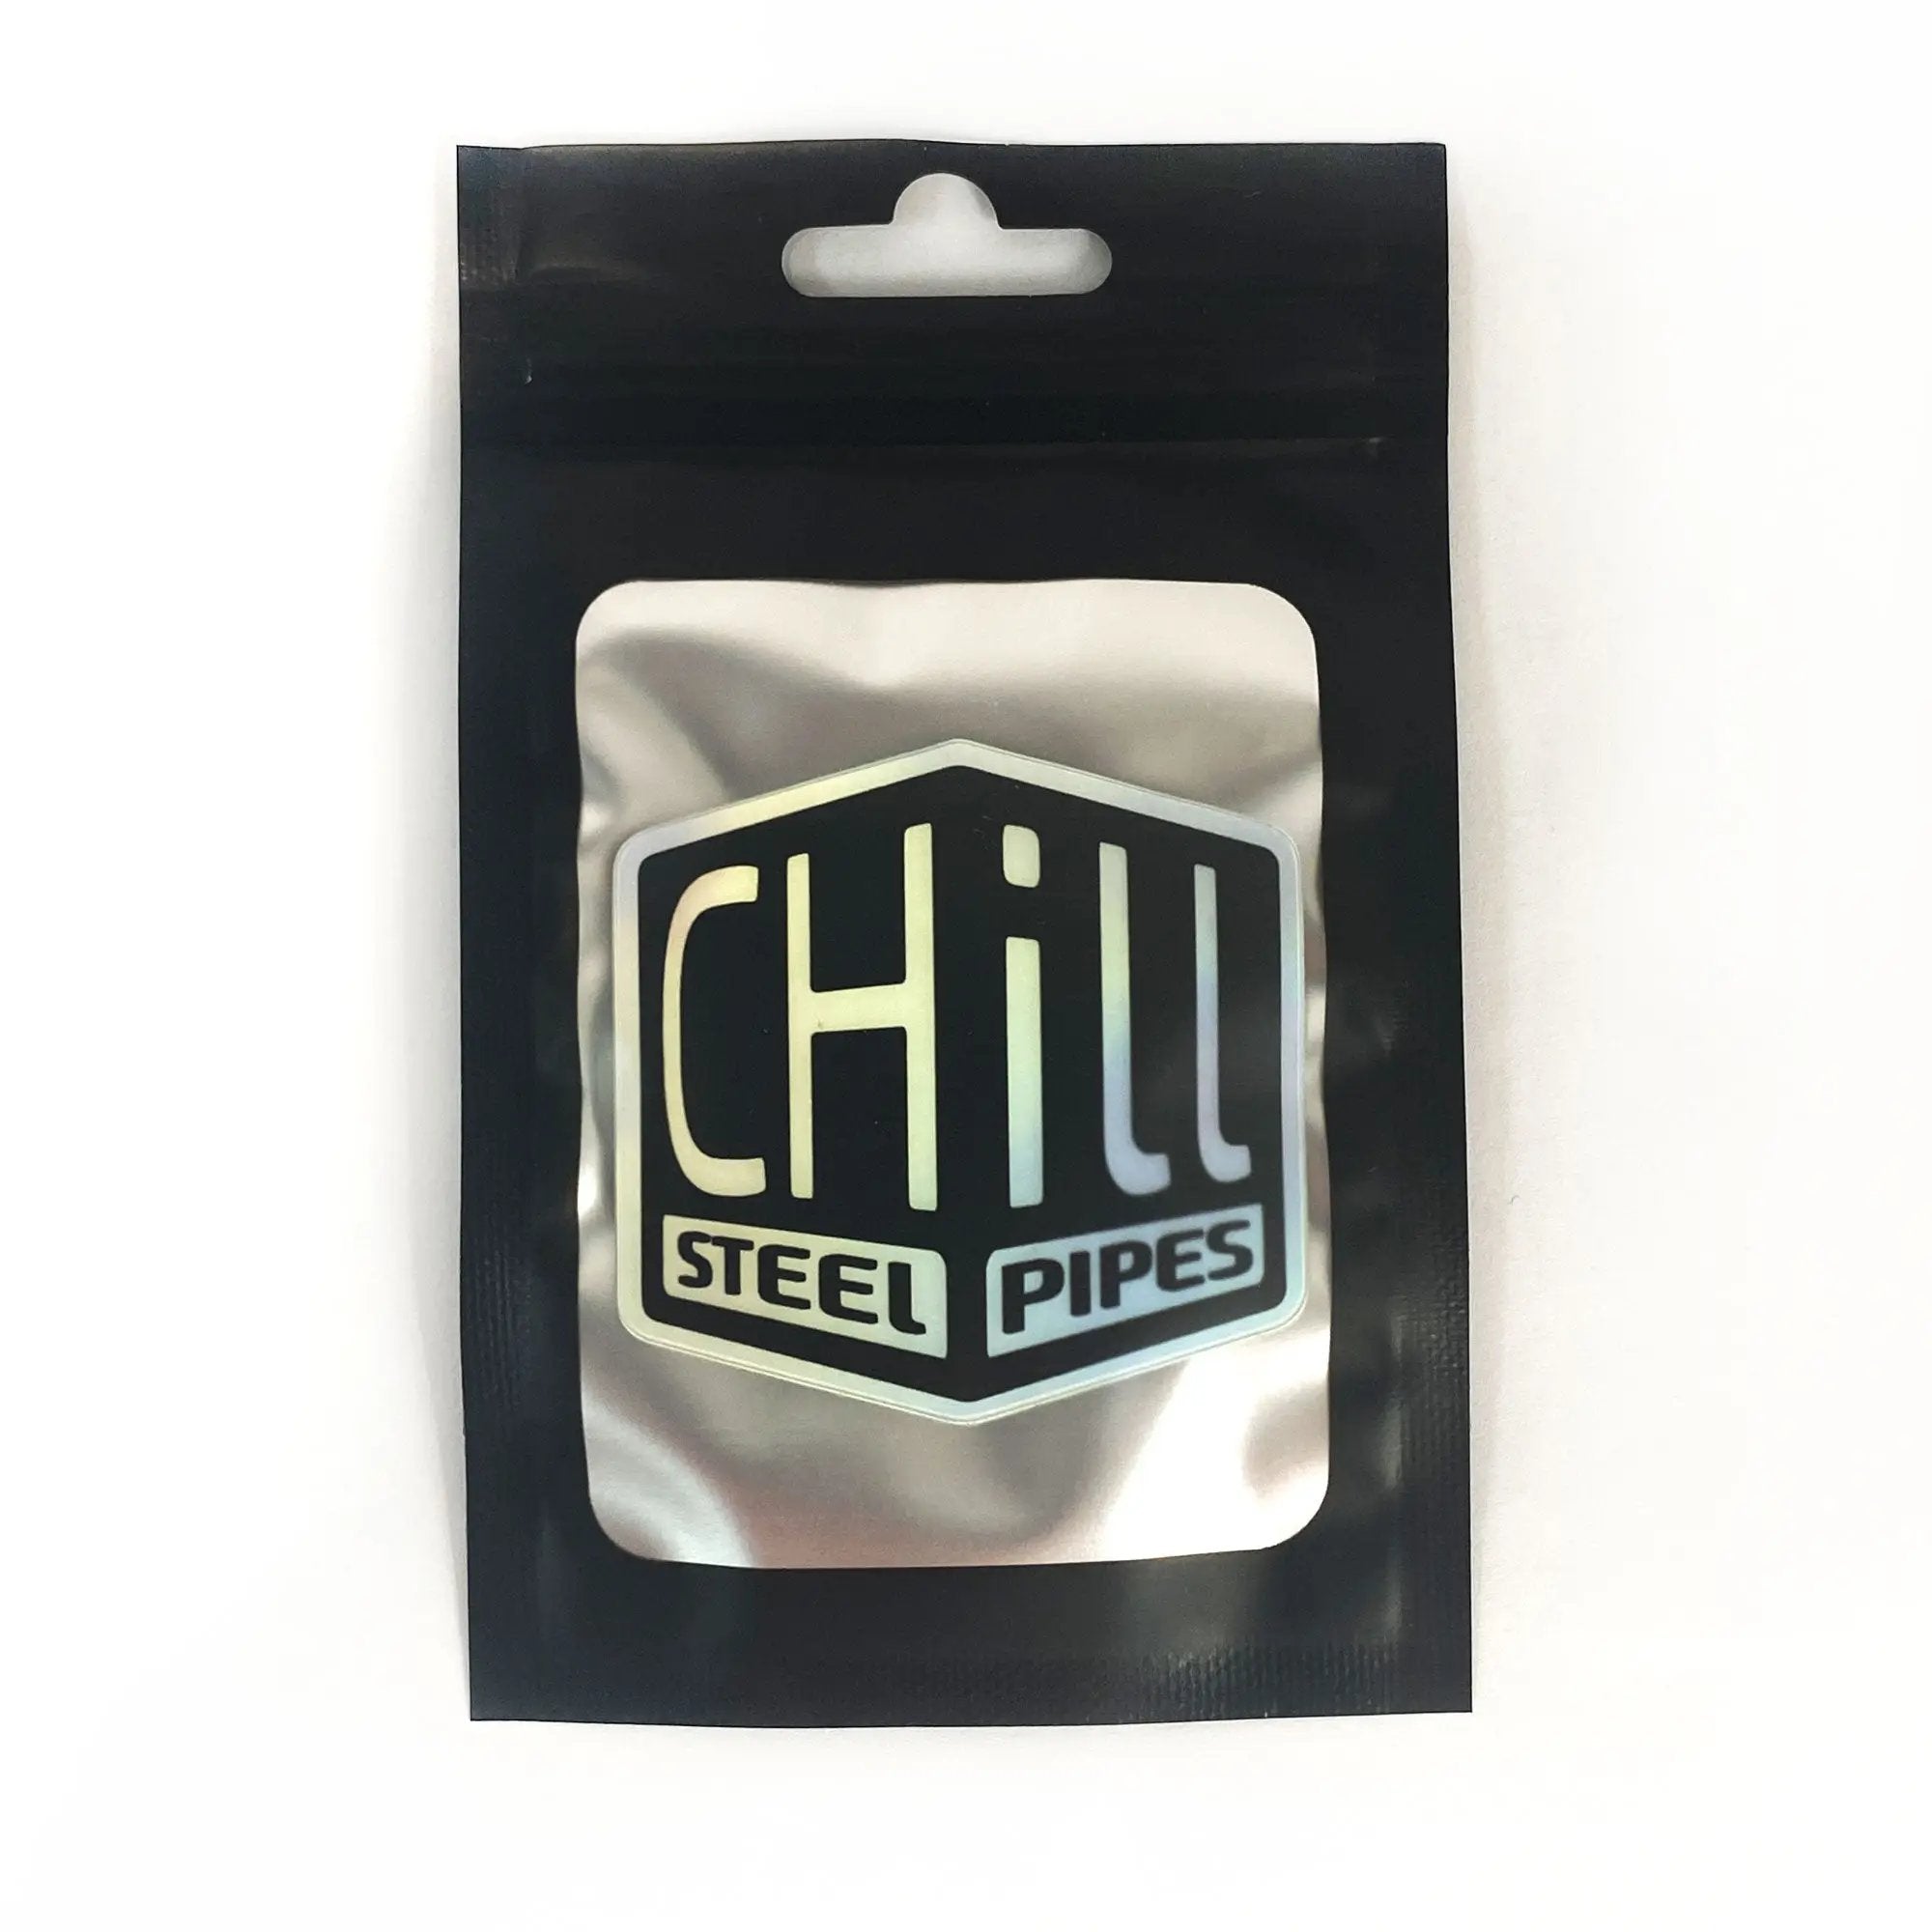 Chill - Neckpiece Gasket Replacement Kit